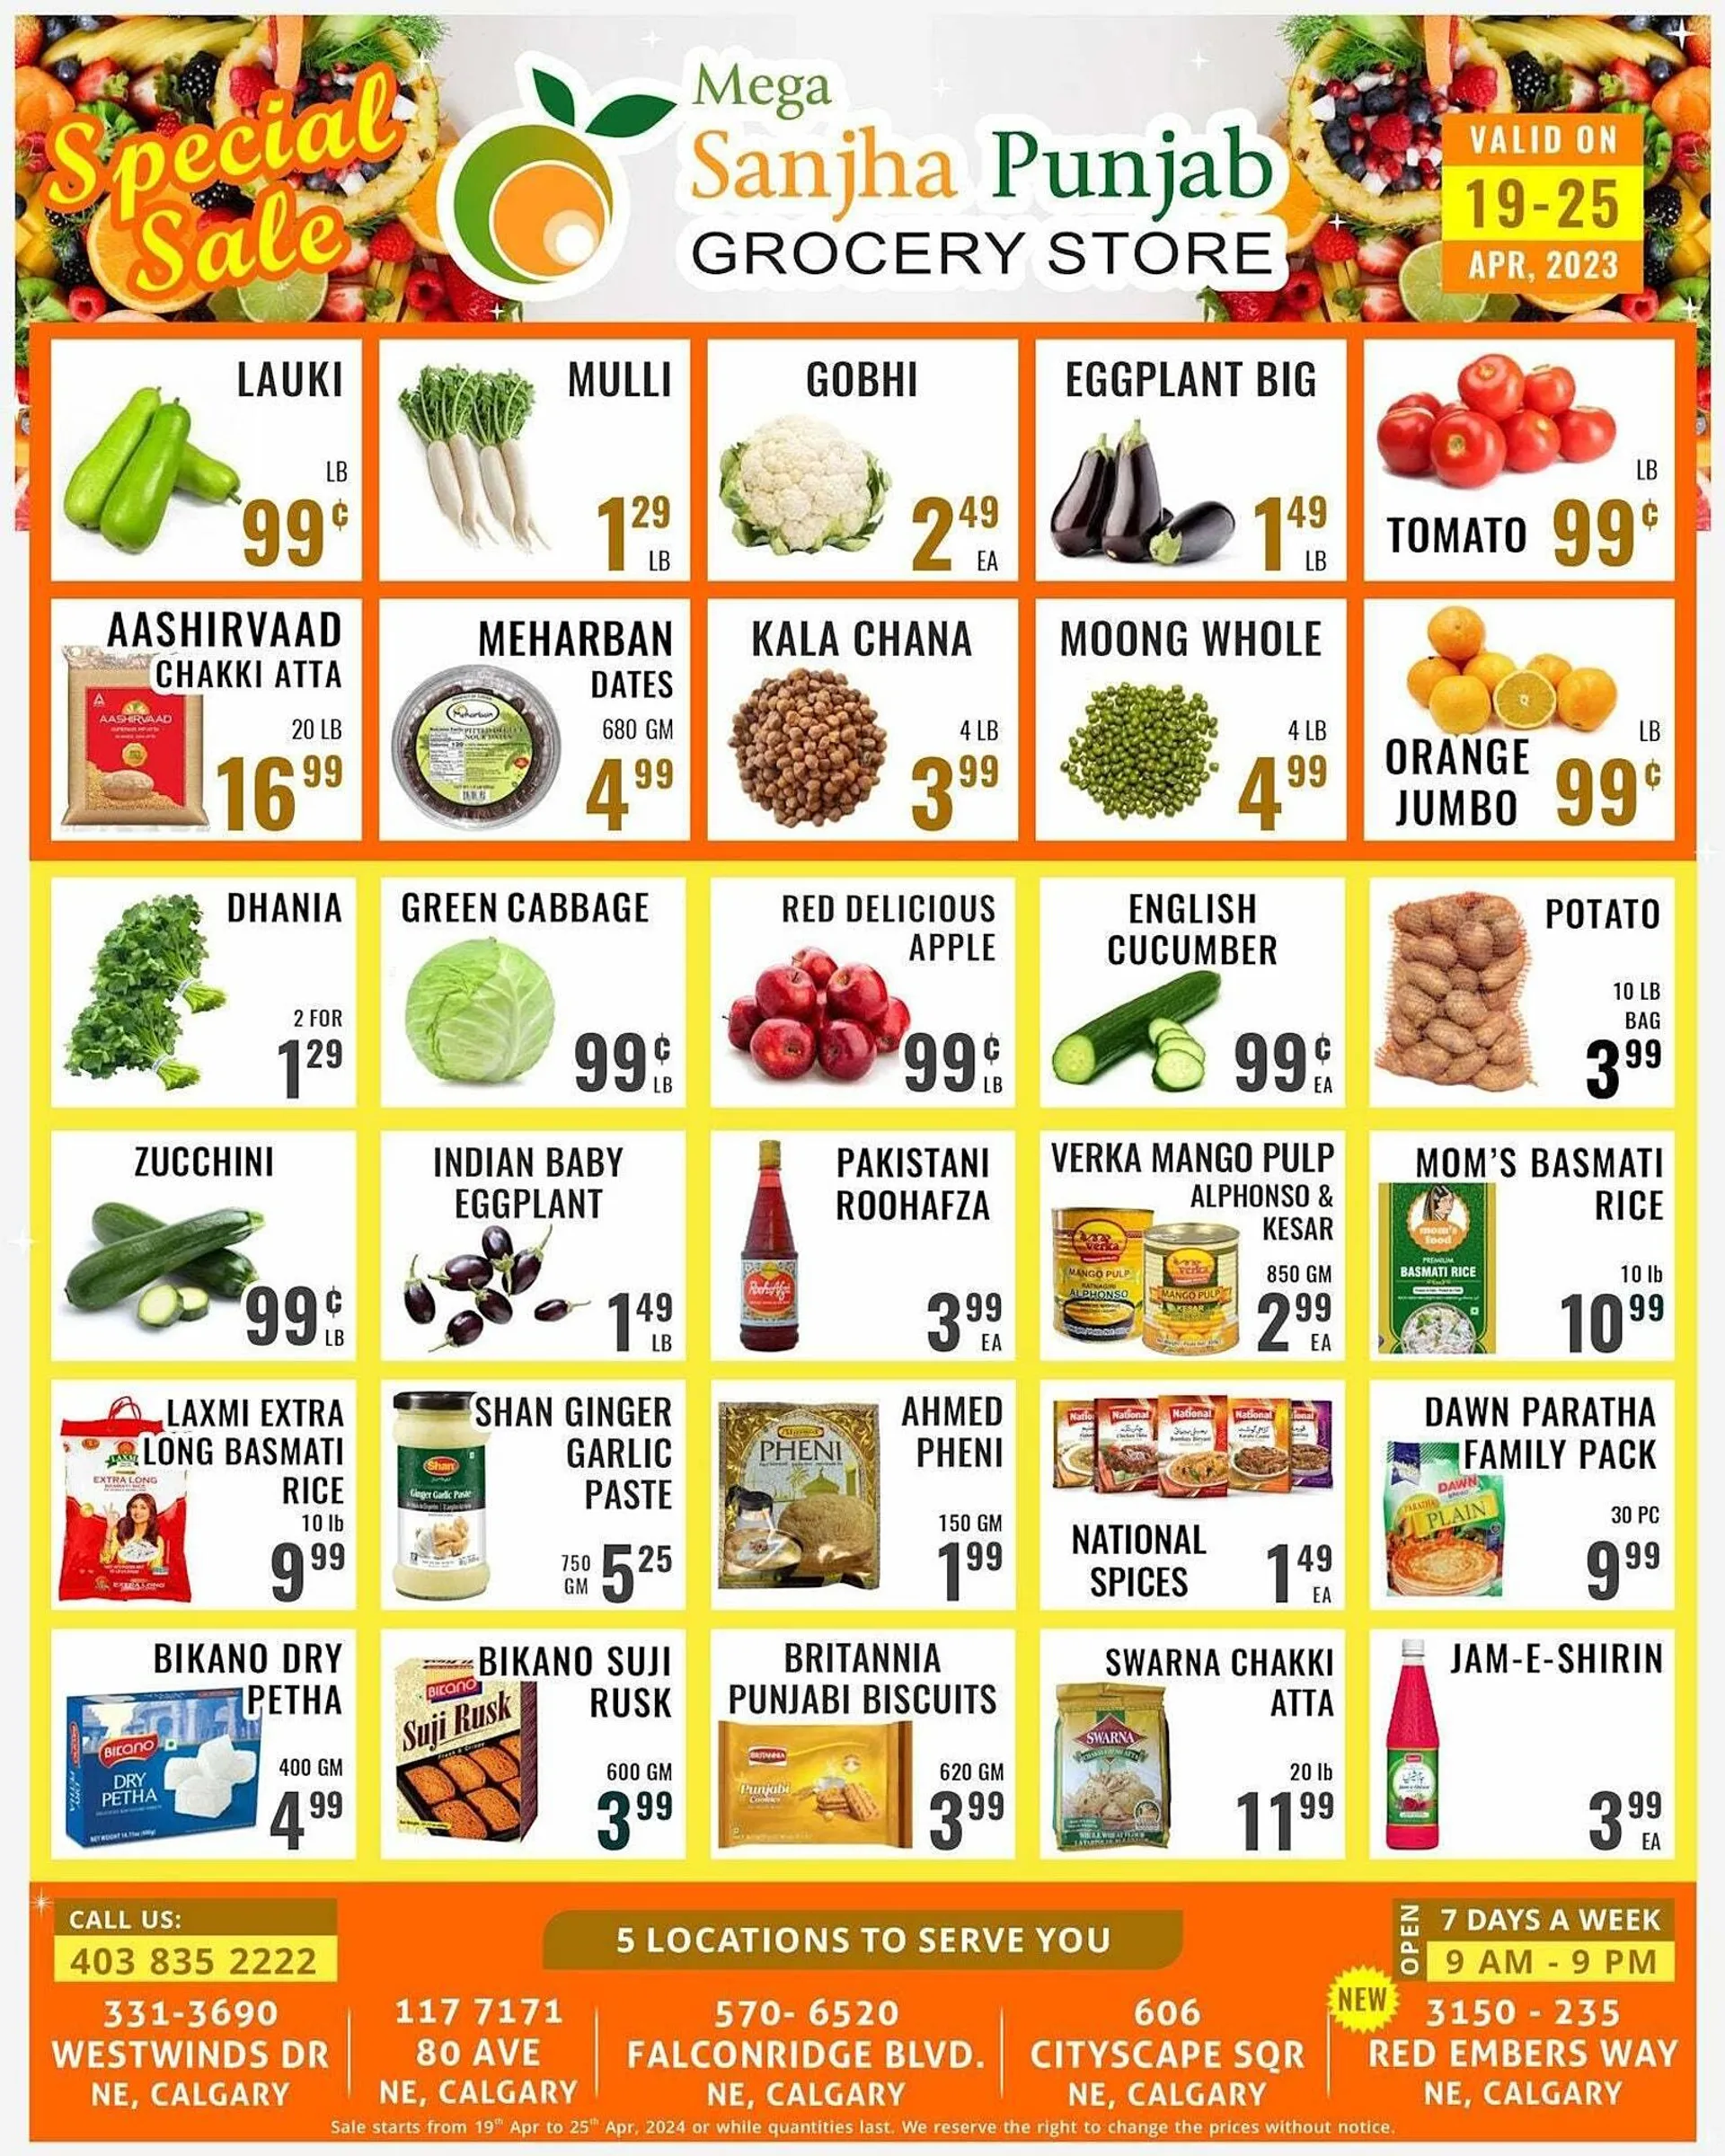 Mega Sanjha Punjab Grocery Store flyer - 1